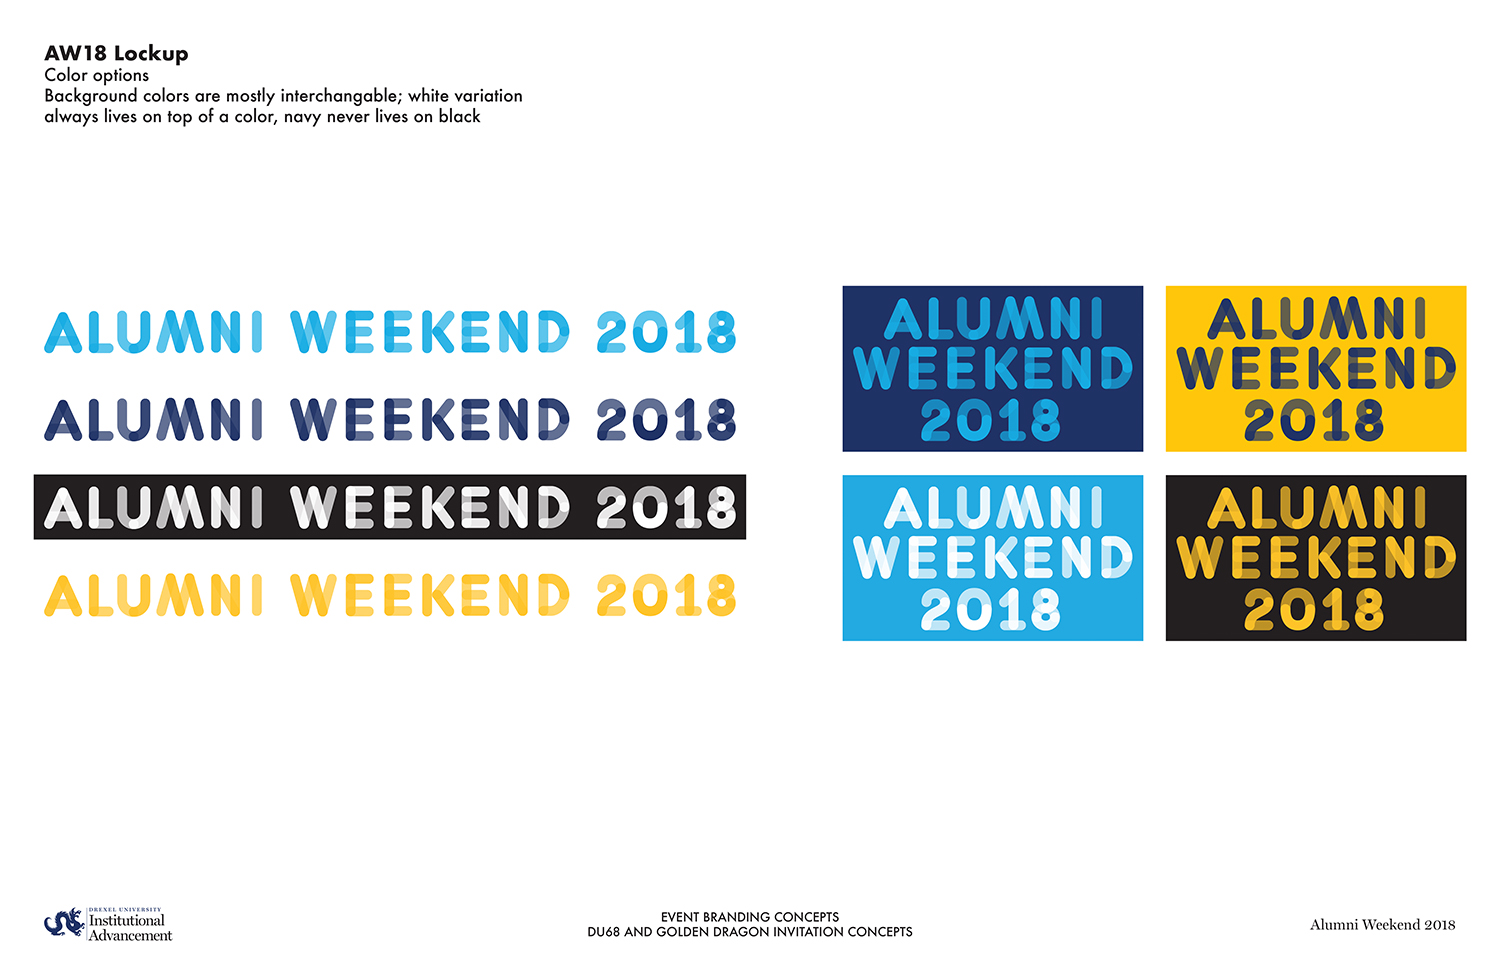 Presentation, slide with multiple colorways of the Alumni Weekend 18 logo